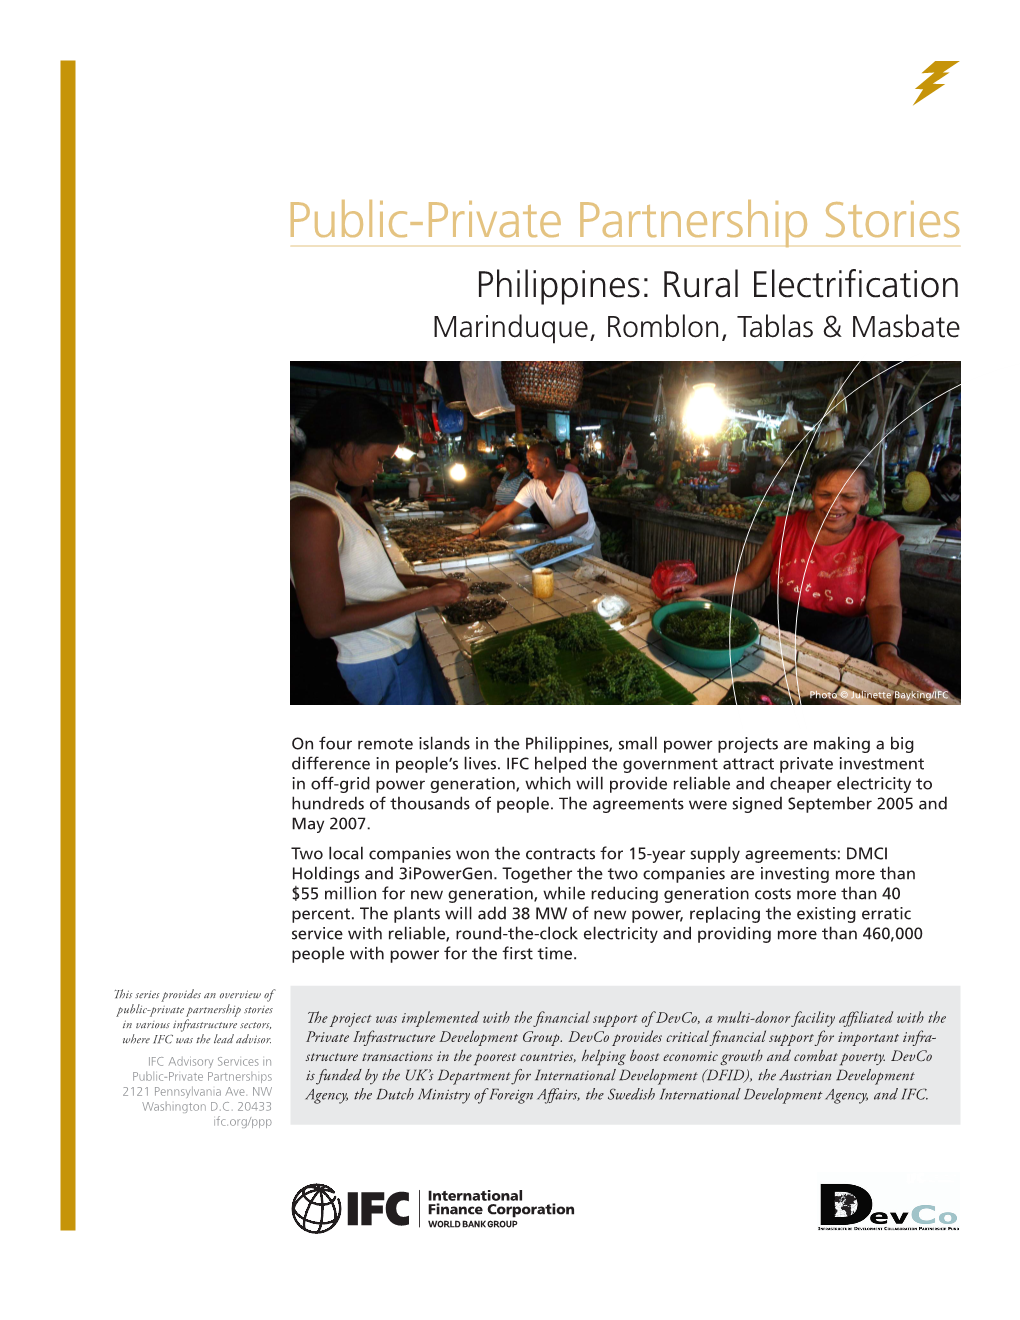 Public-Private Partnership Stories Philippines: Rural Electrification Marinduque, Romblon, Tablas & Masbate